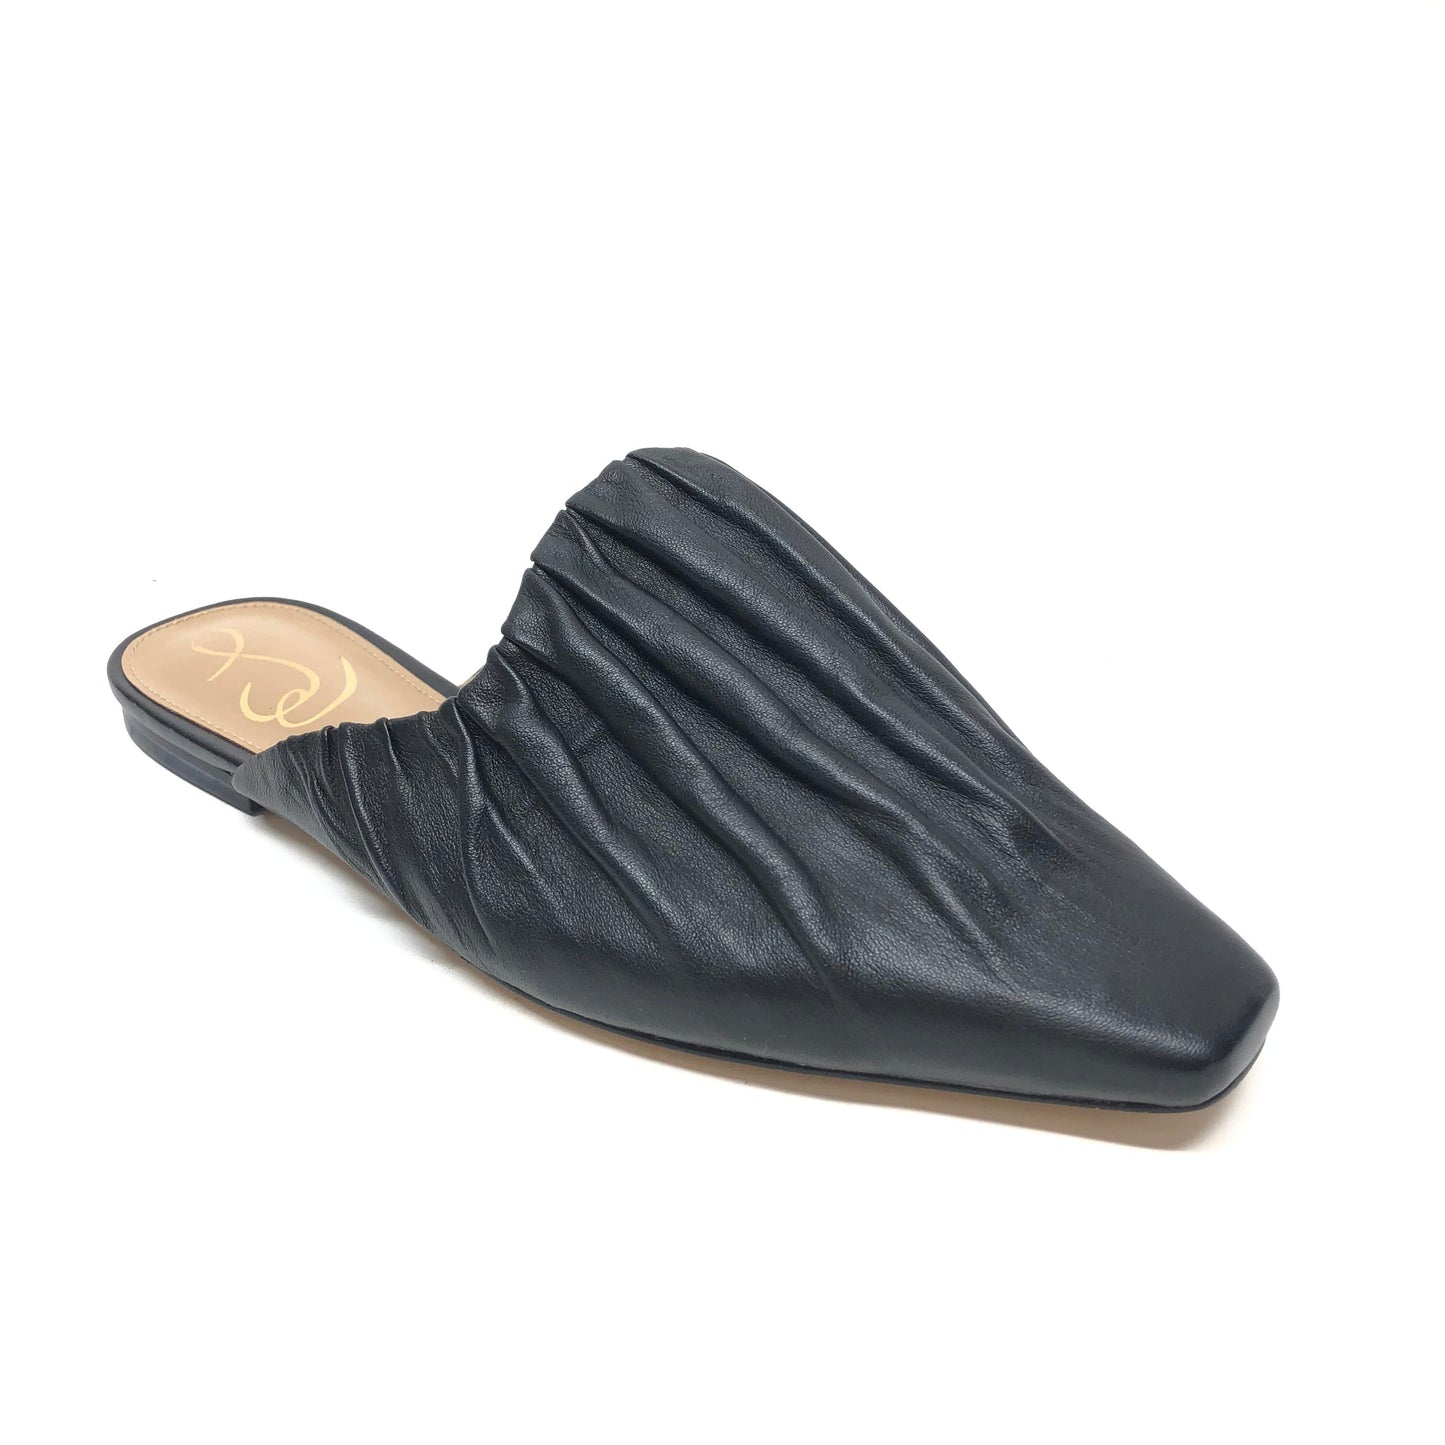 Black Shoes Flats Sam Edelman, Size 7.5